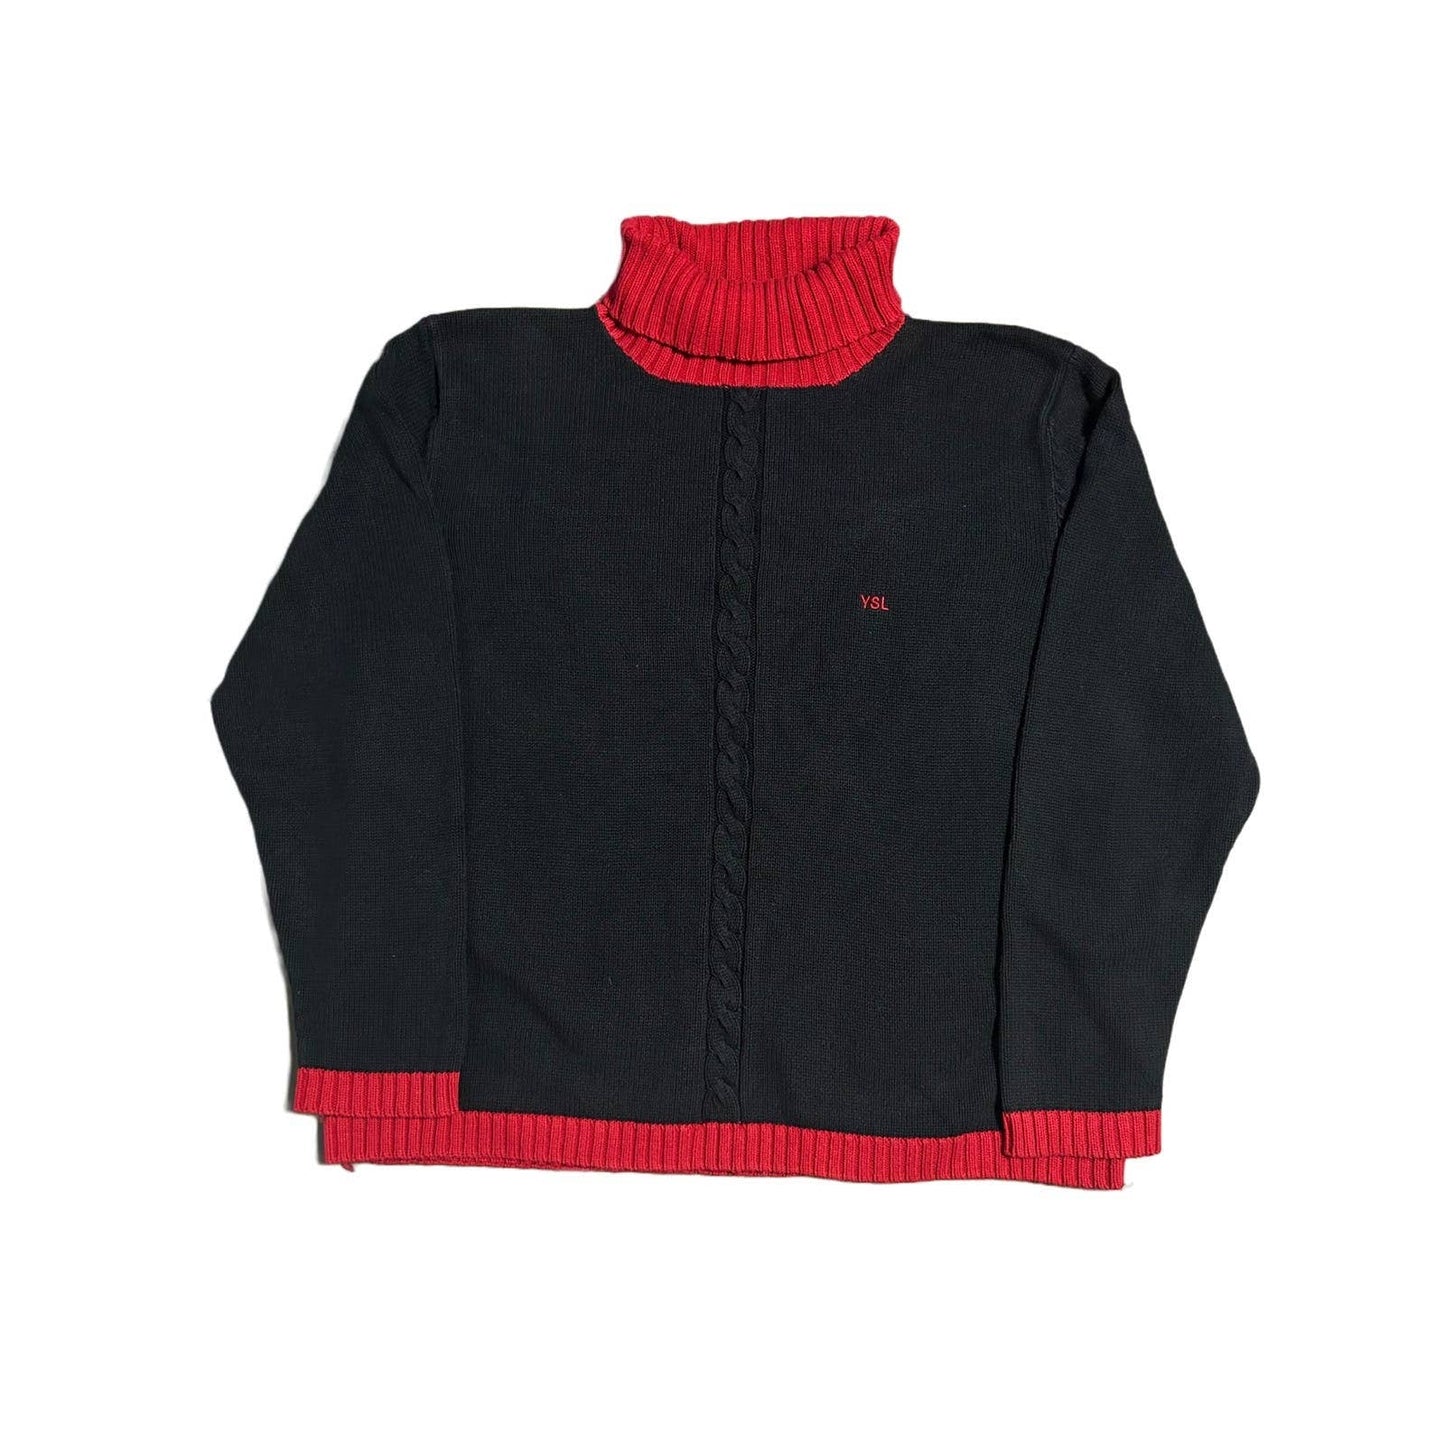 YSL sweater turtleneck black red Saint Laurent Jeans